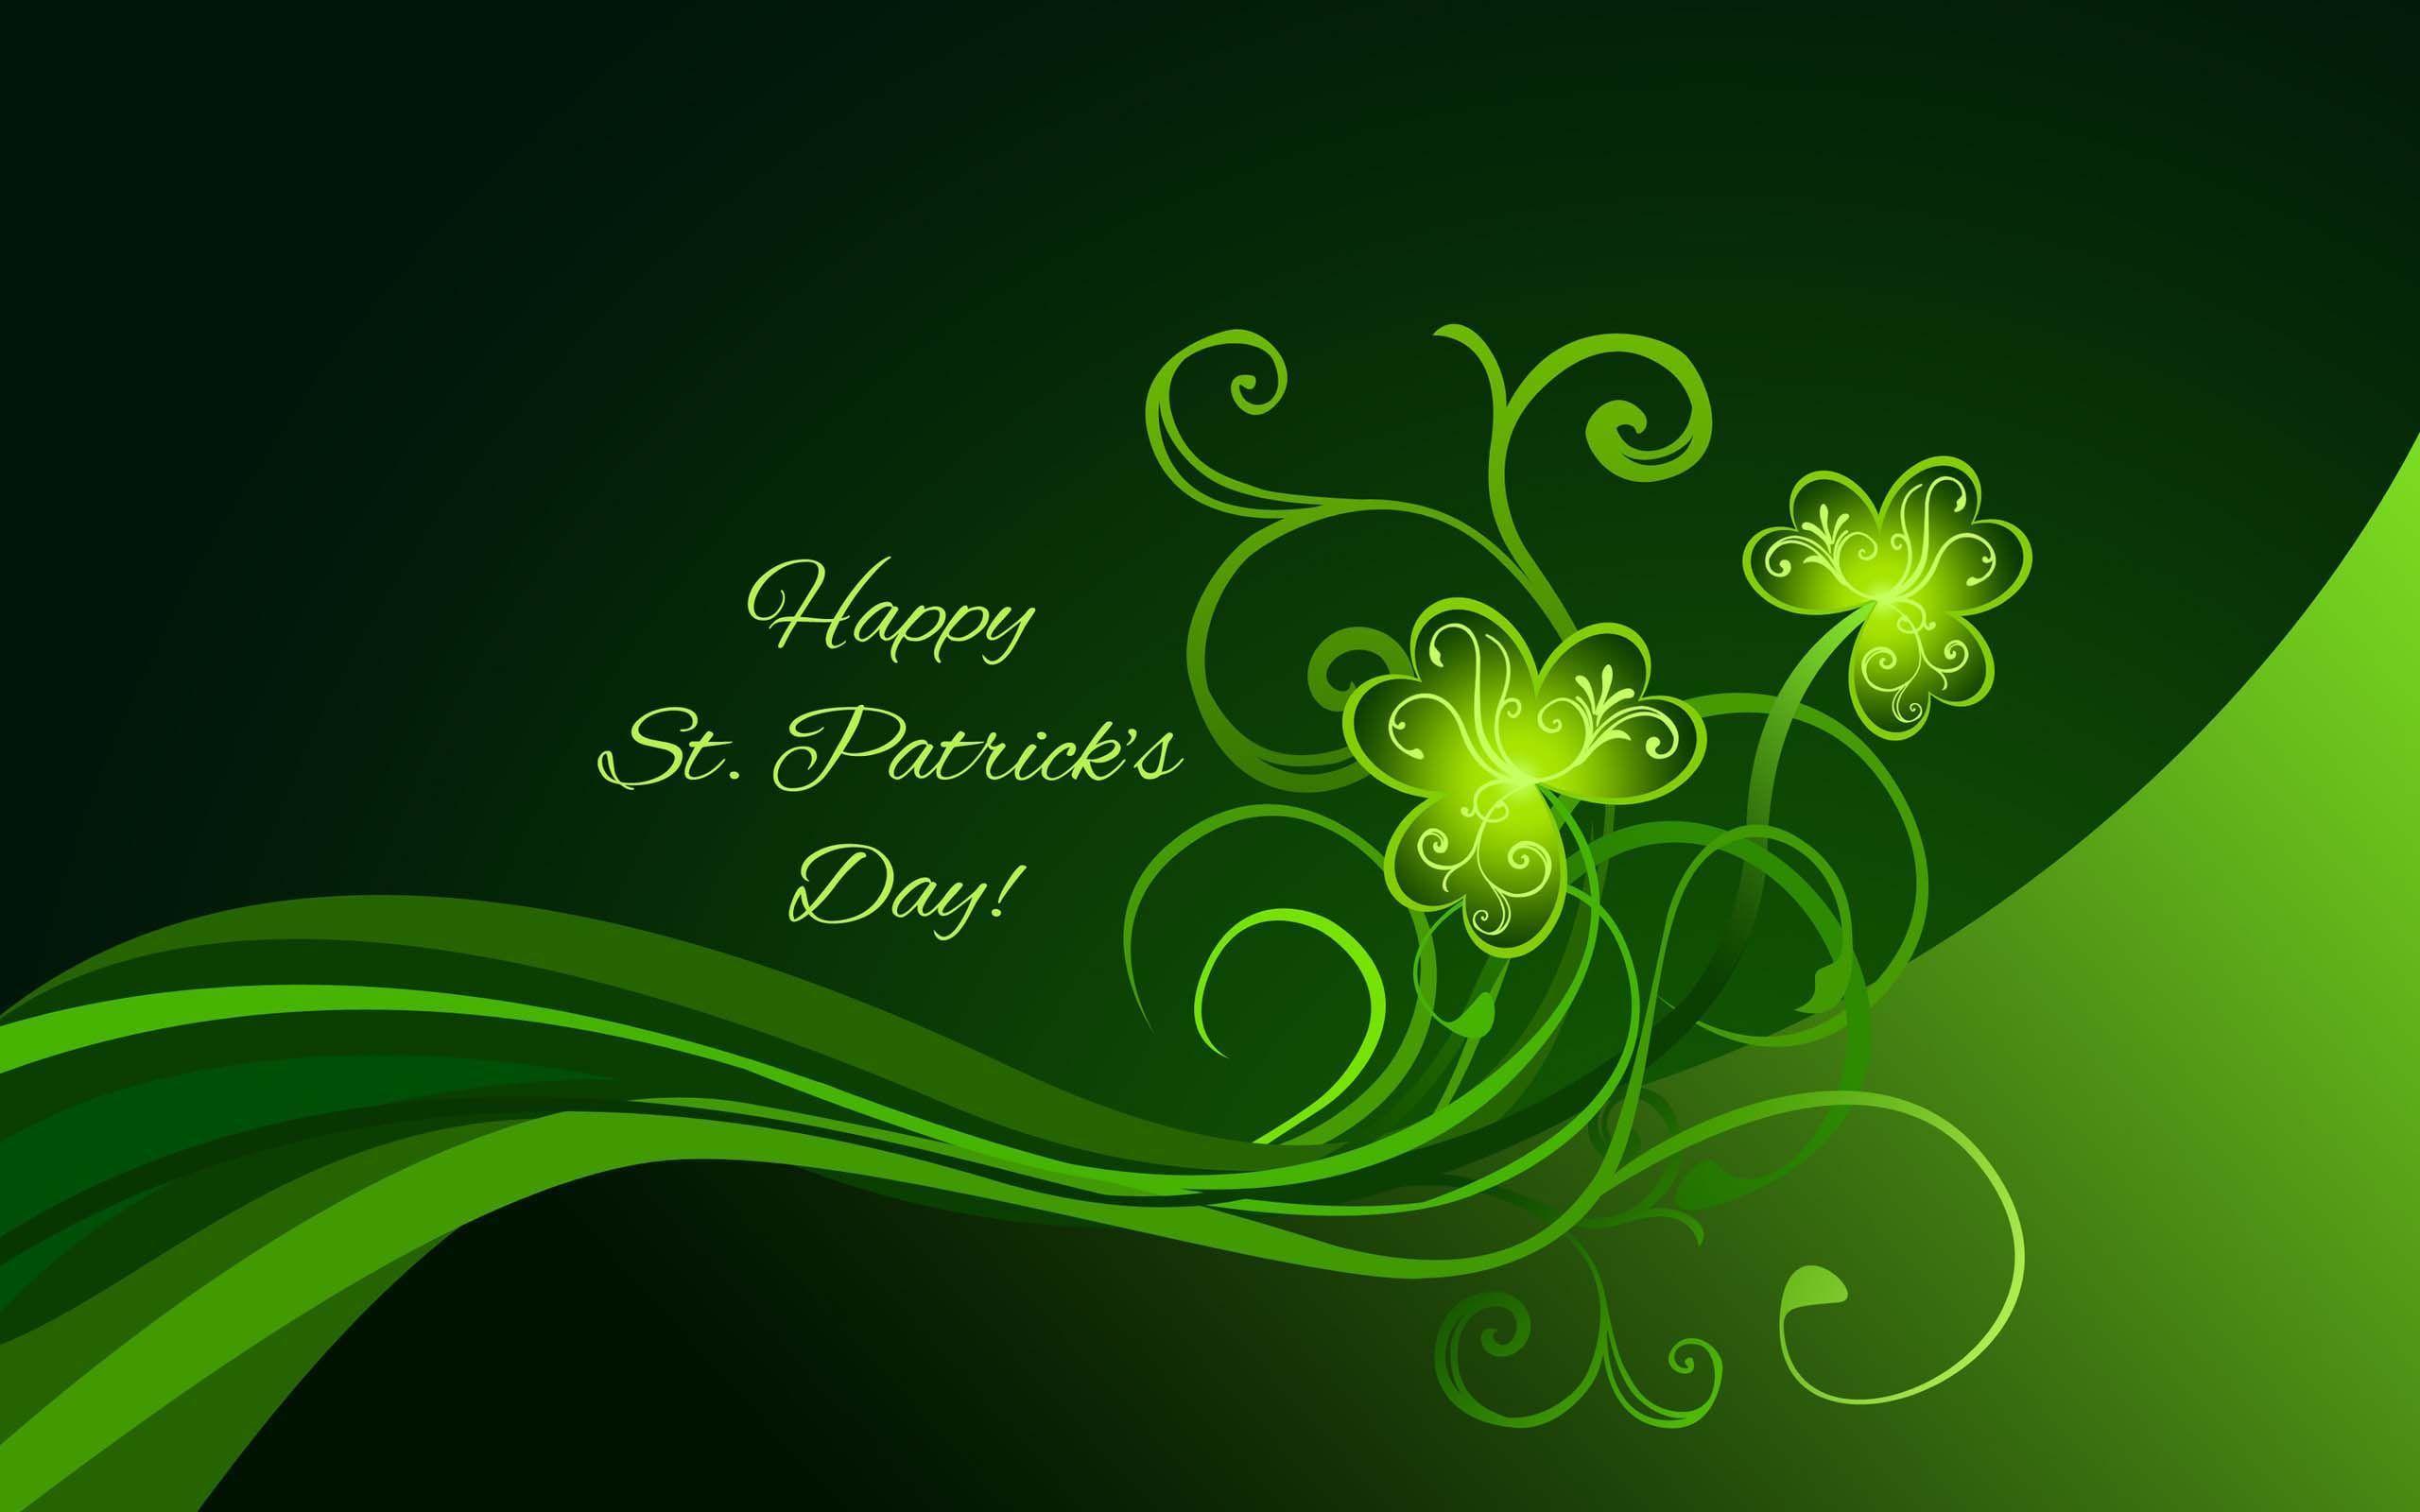 St. Patrick's Day Background. Happy St Patrick's Day PC